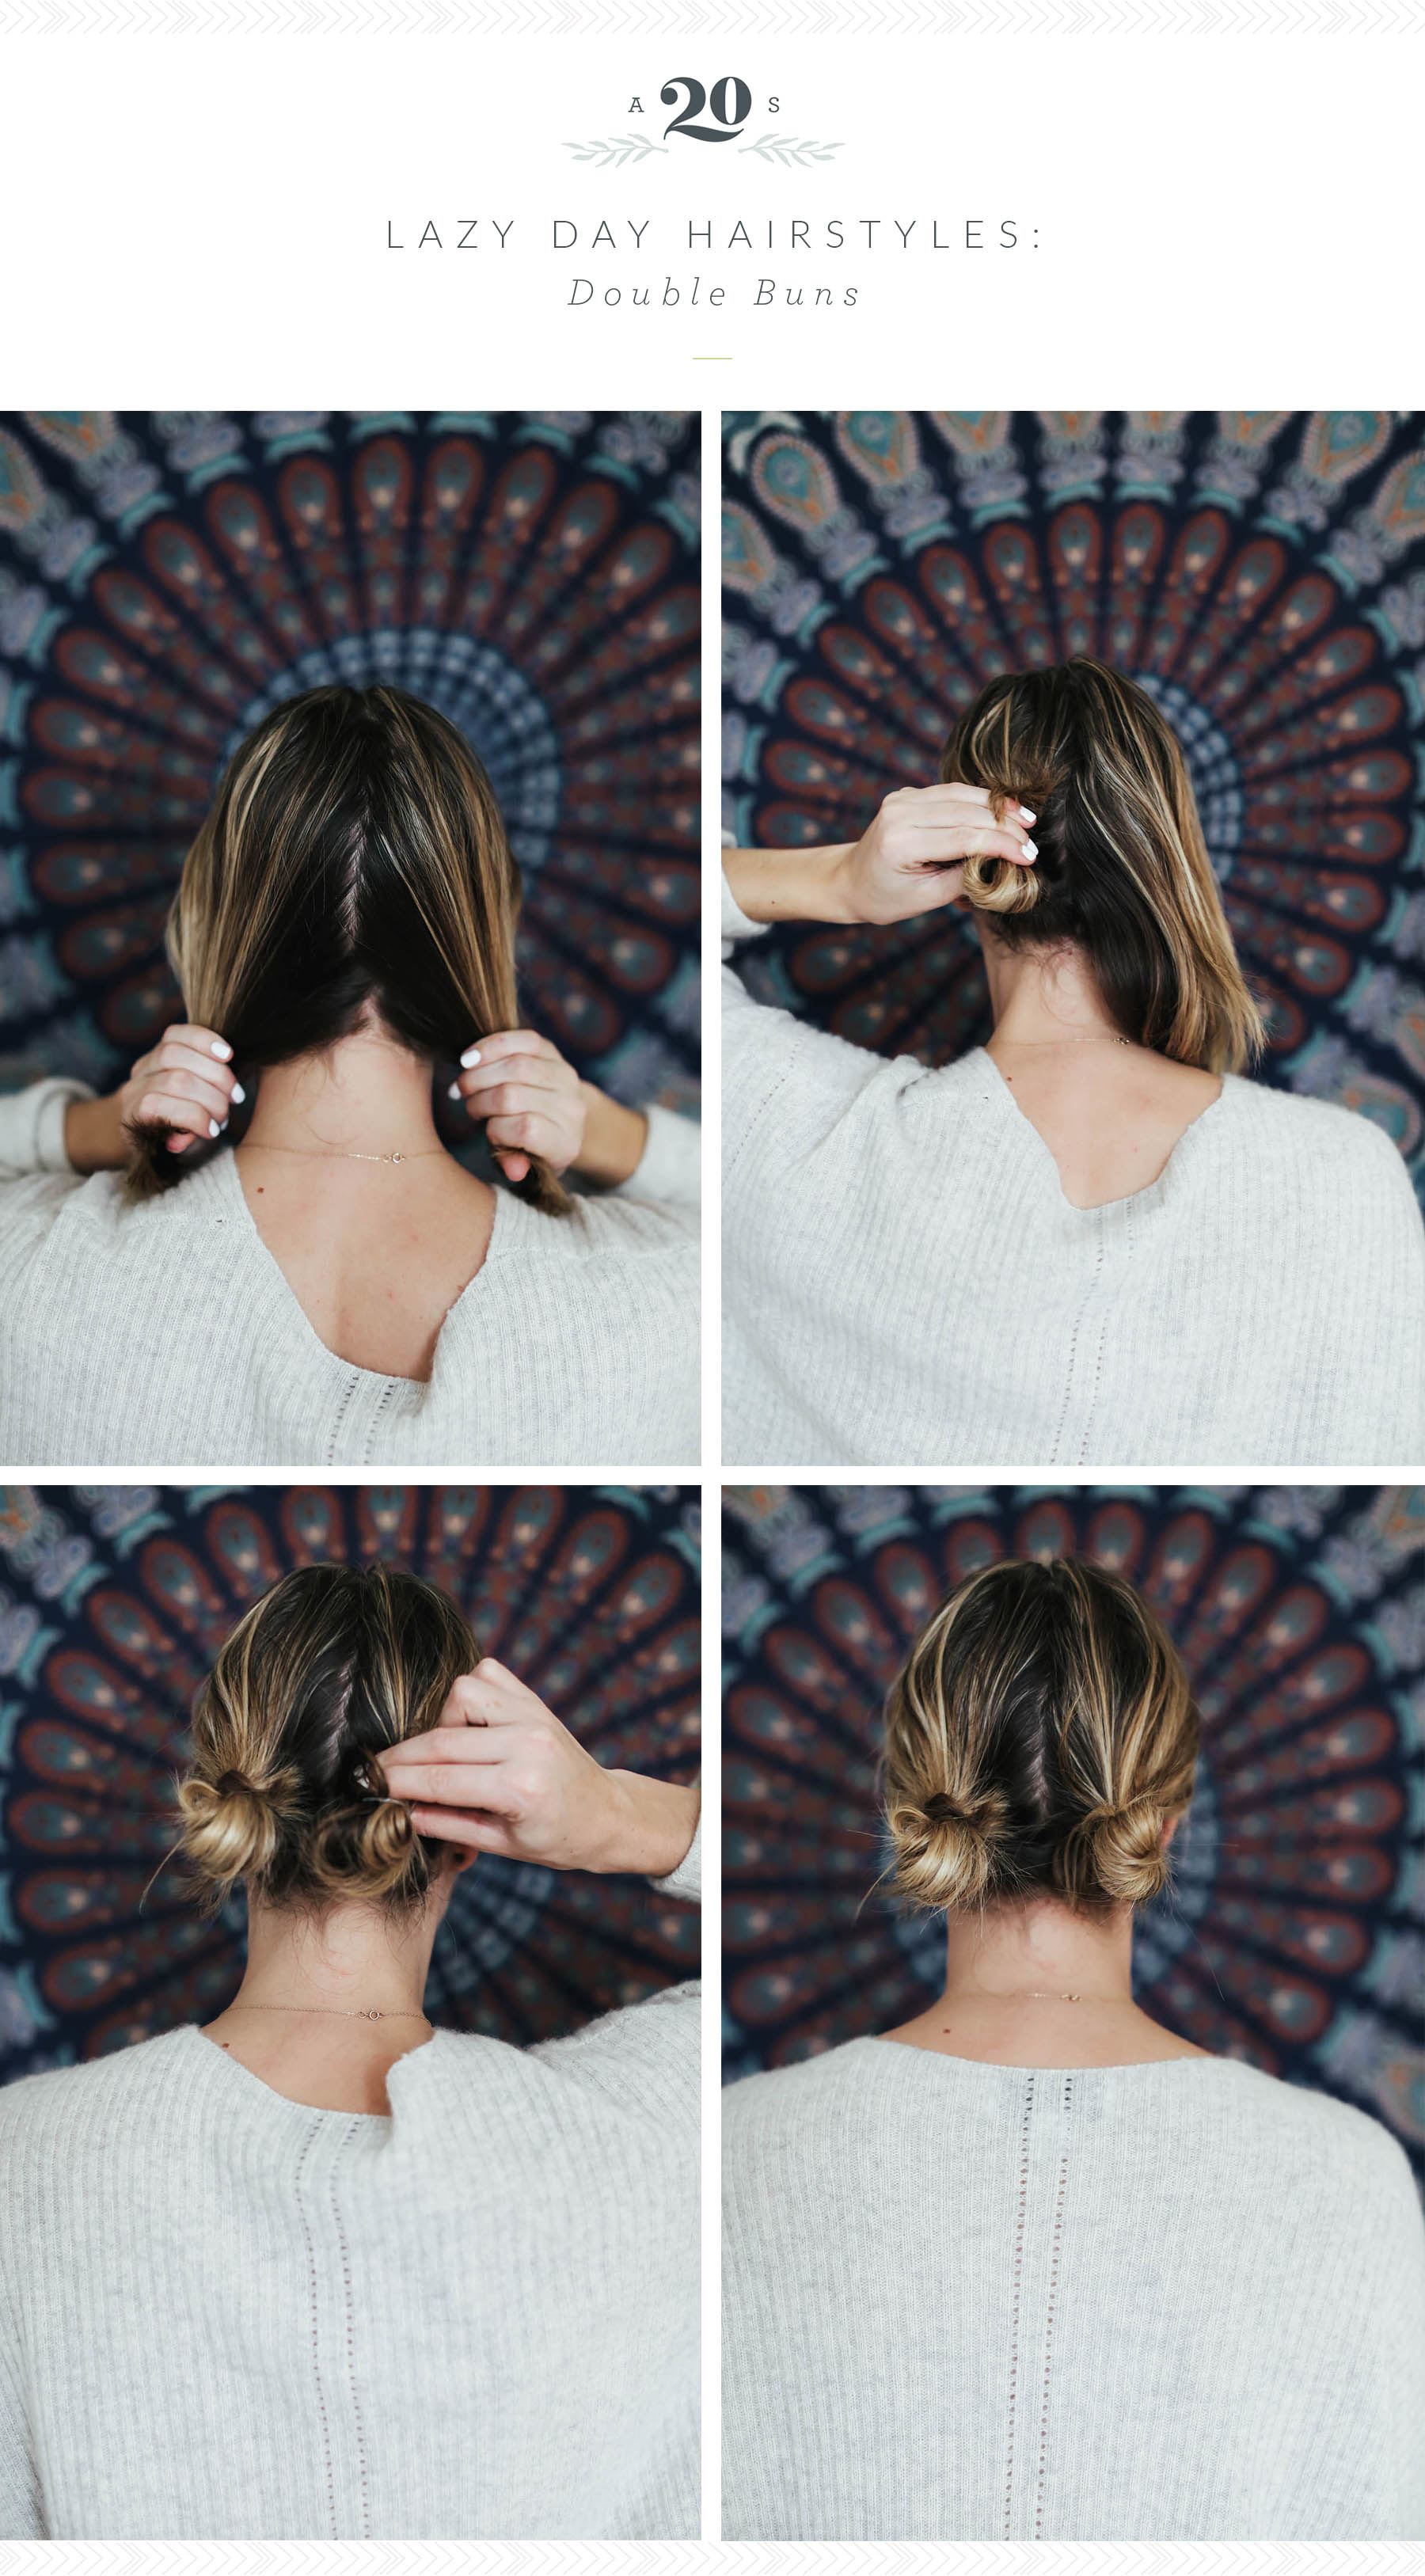 How To Braid Your Own Hair: Tutorials For 8 Types Of Braids | mindbodygreen